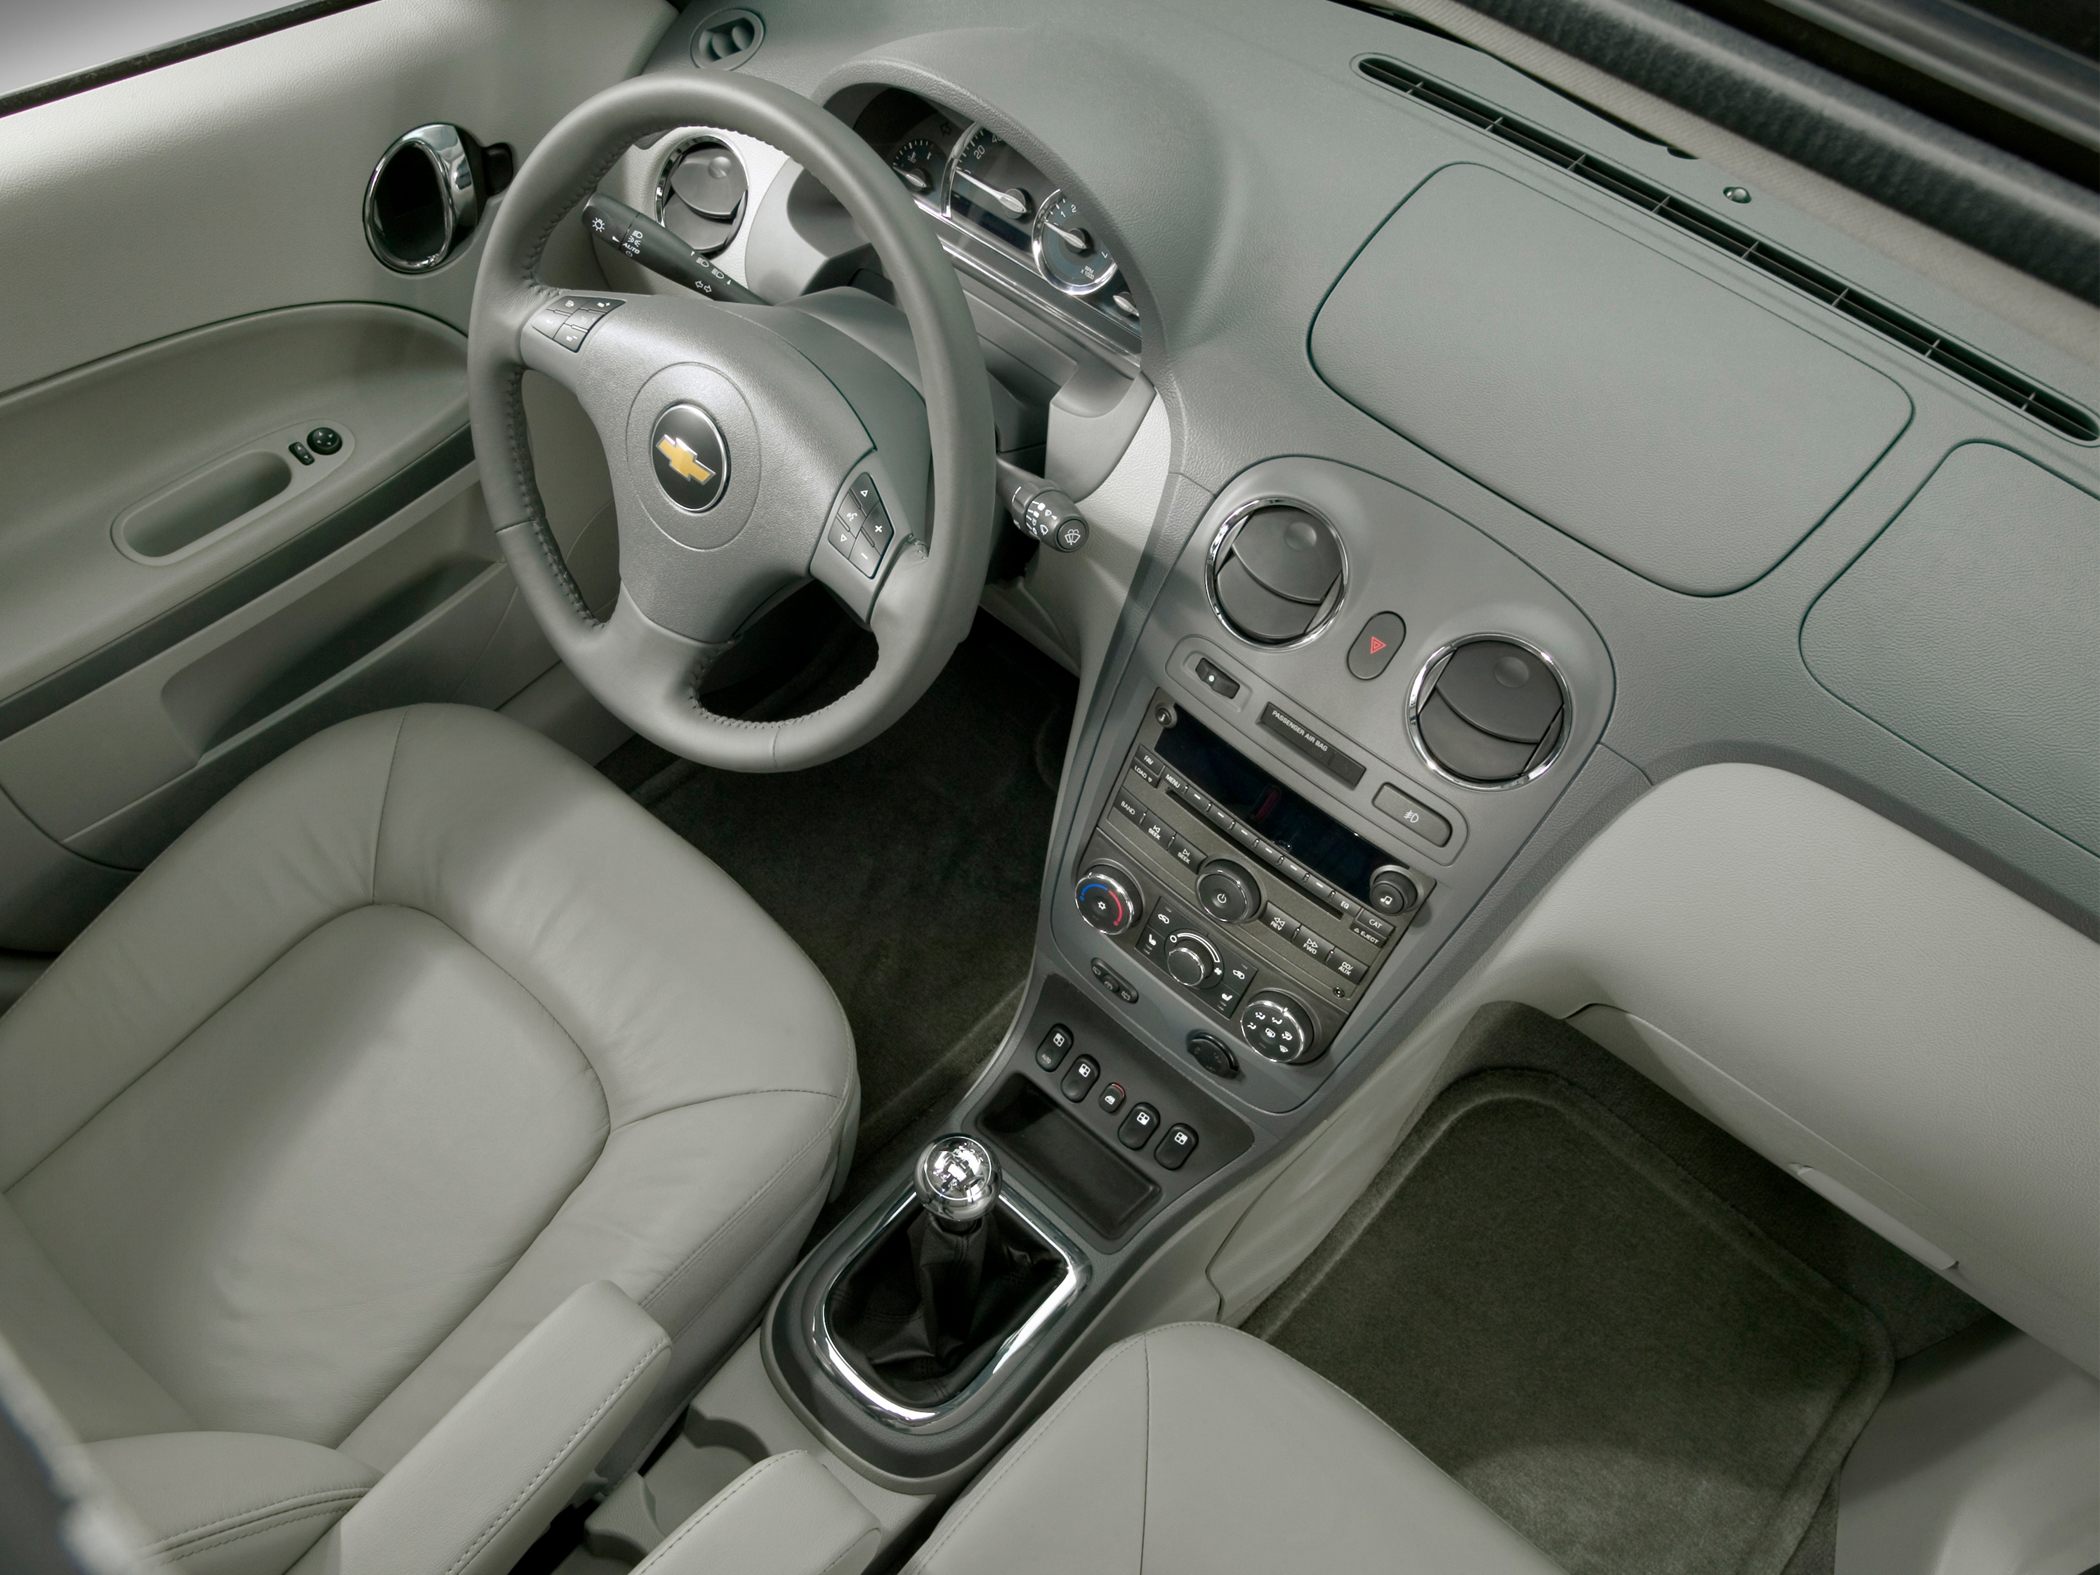 Chevy hhr panel interior